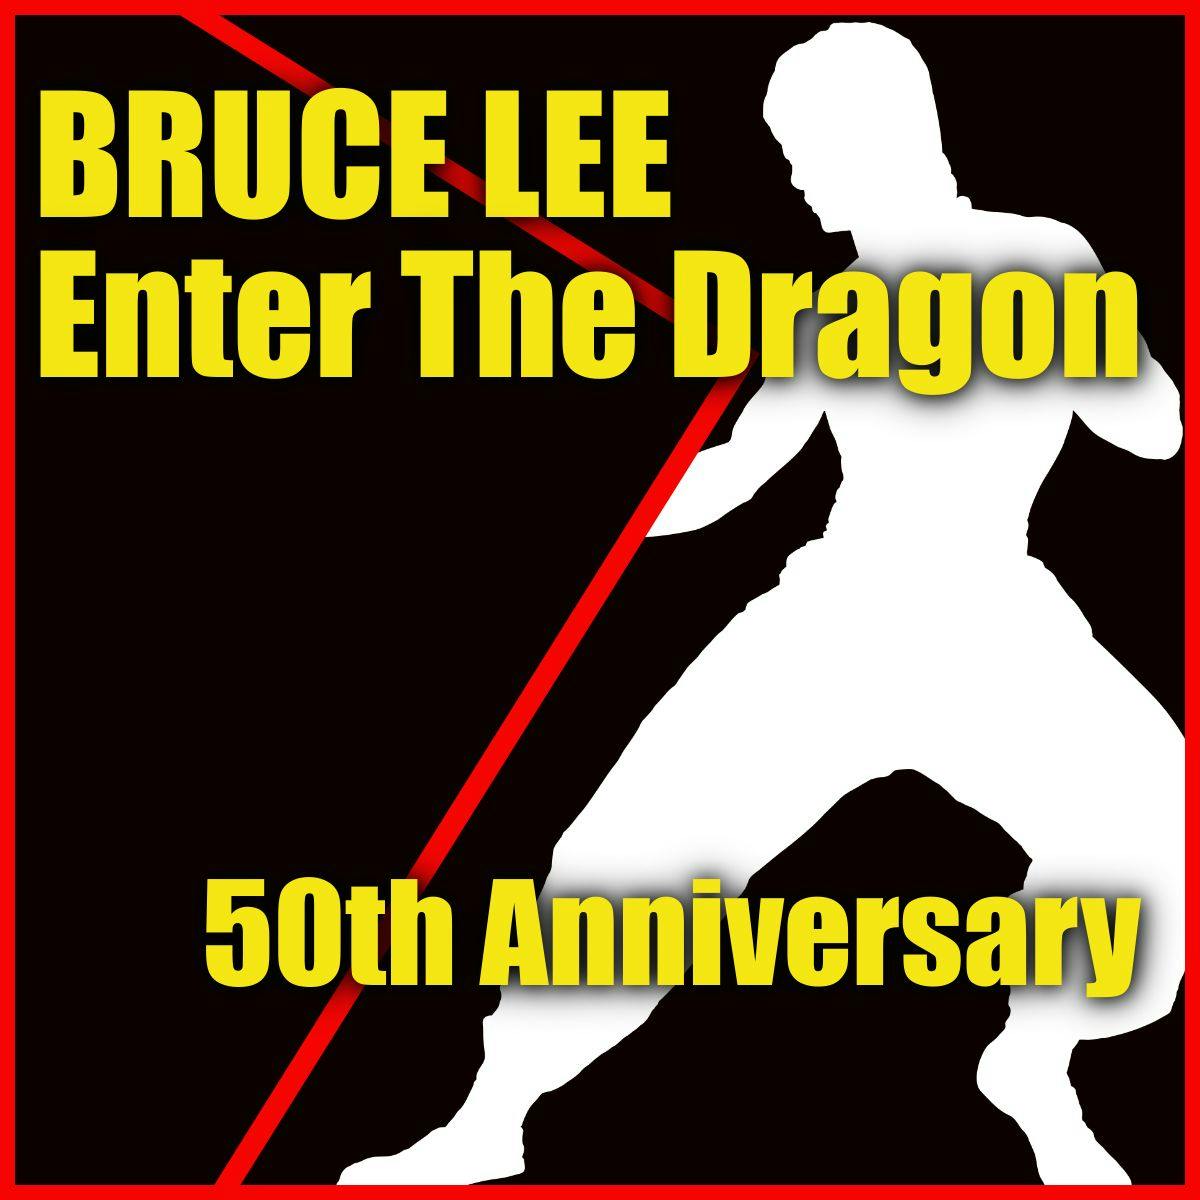 BRUCE LEE Enter The Dragon 50th Anniversary Celebration